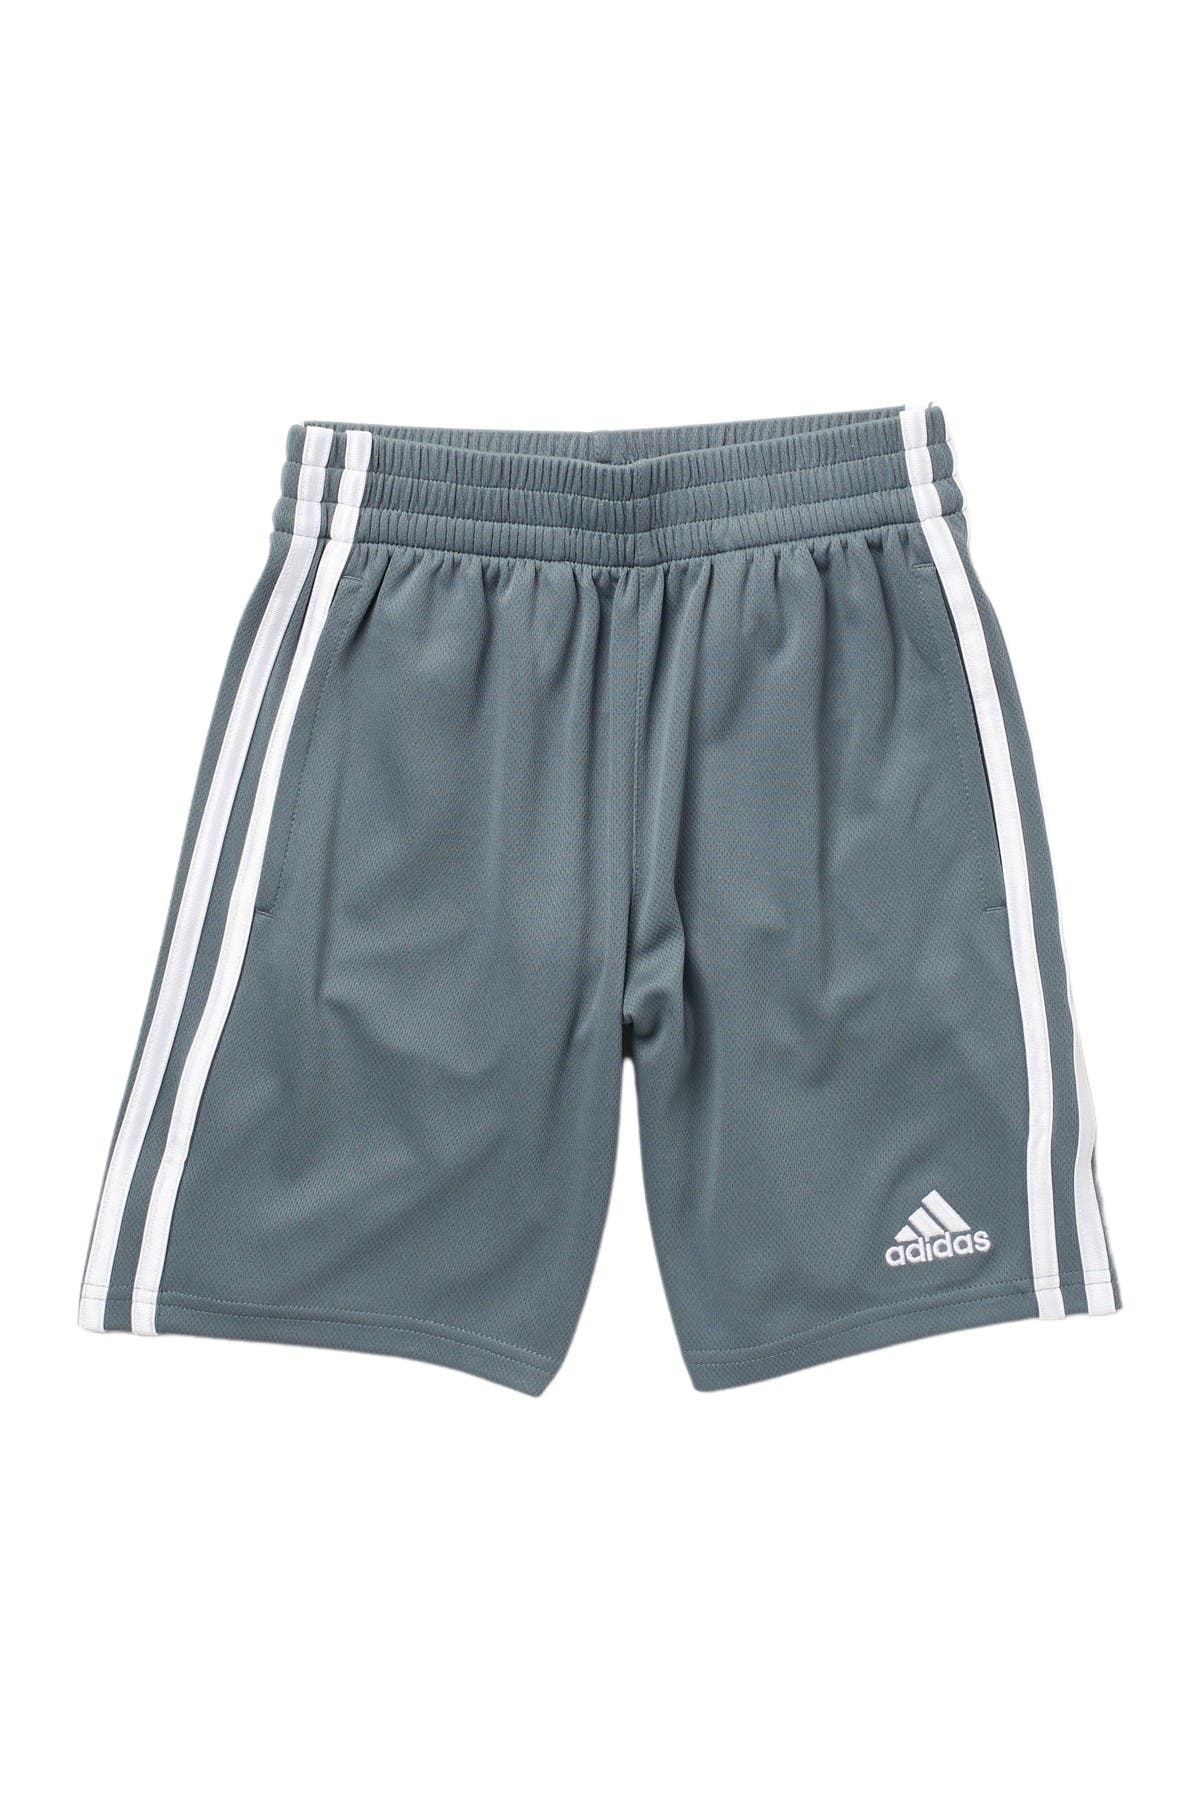 Adidas Originals Kids' 3 Stripe Mesh Shorts In Open Blue1